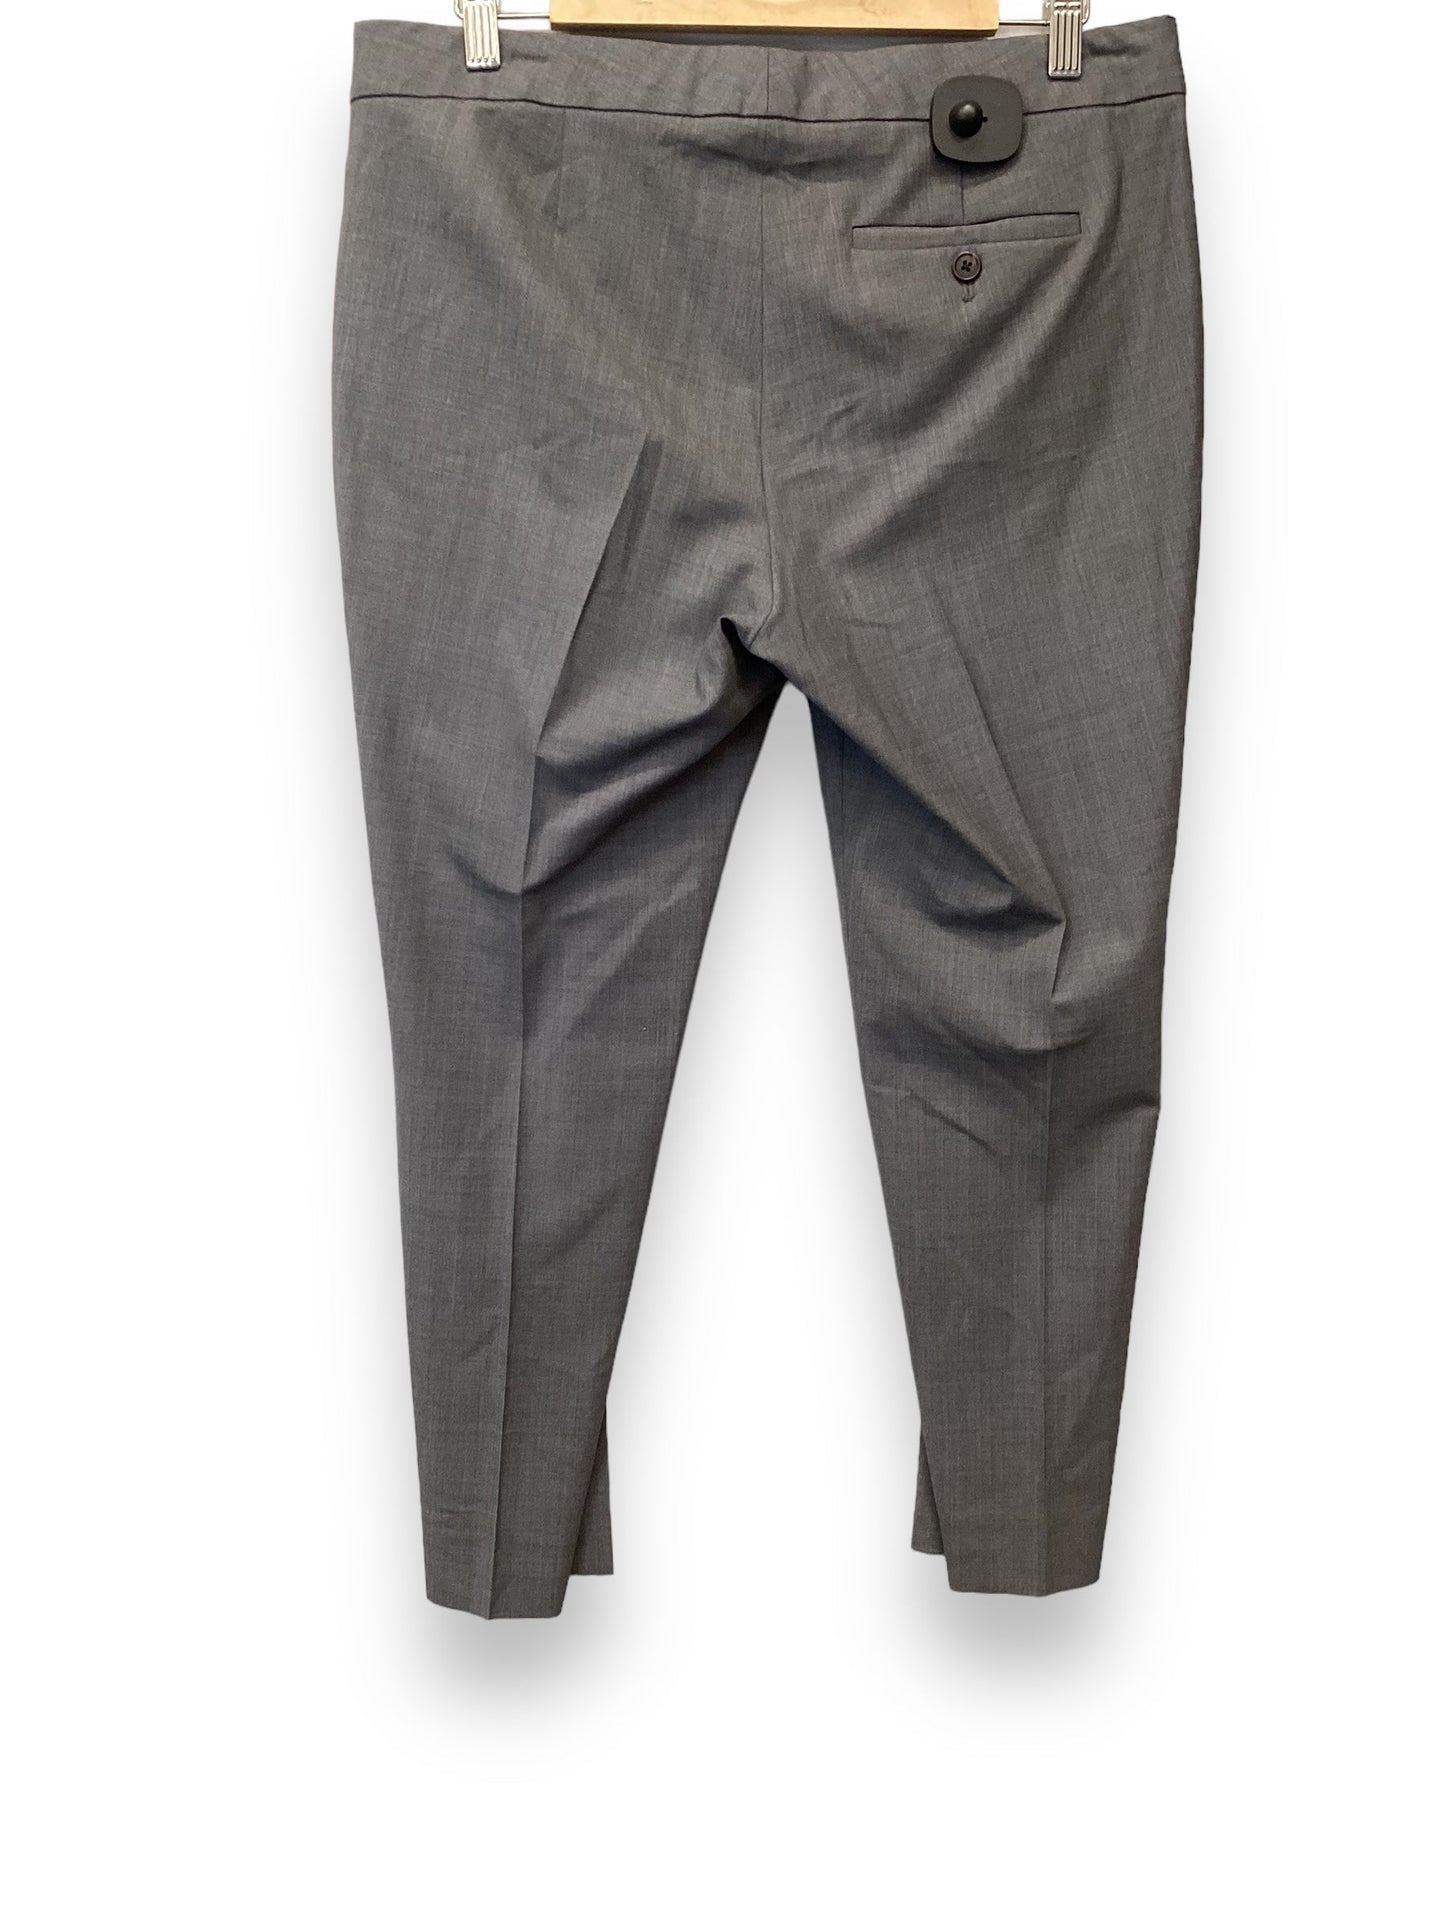 Pants Cropped By J Crew  Size: Petite  Medium